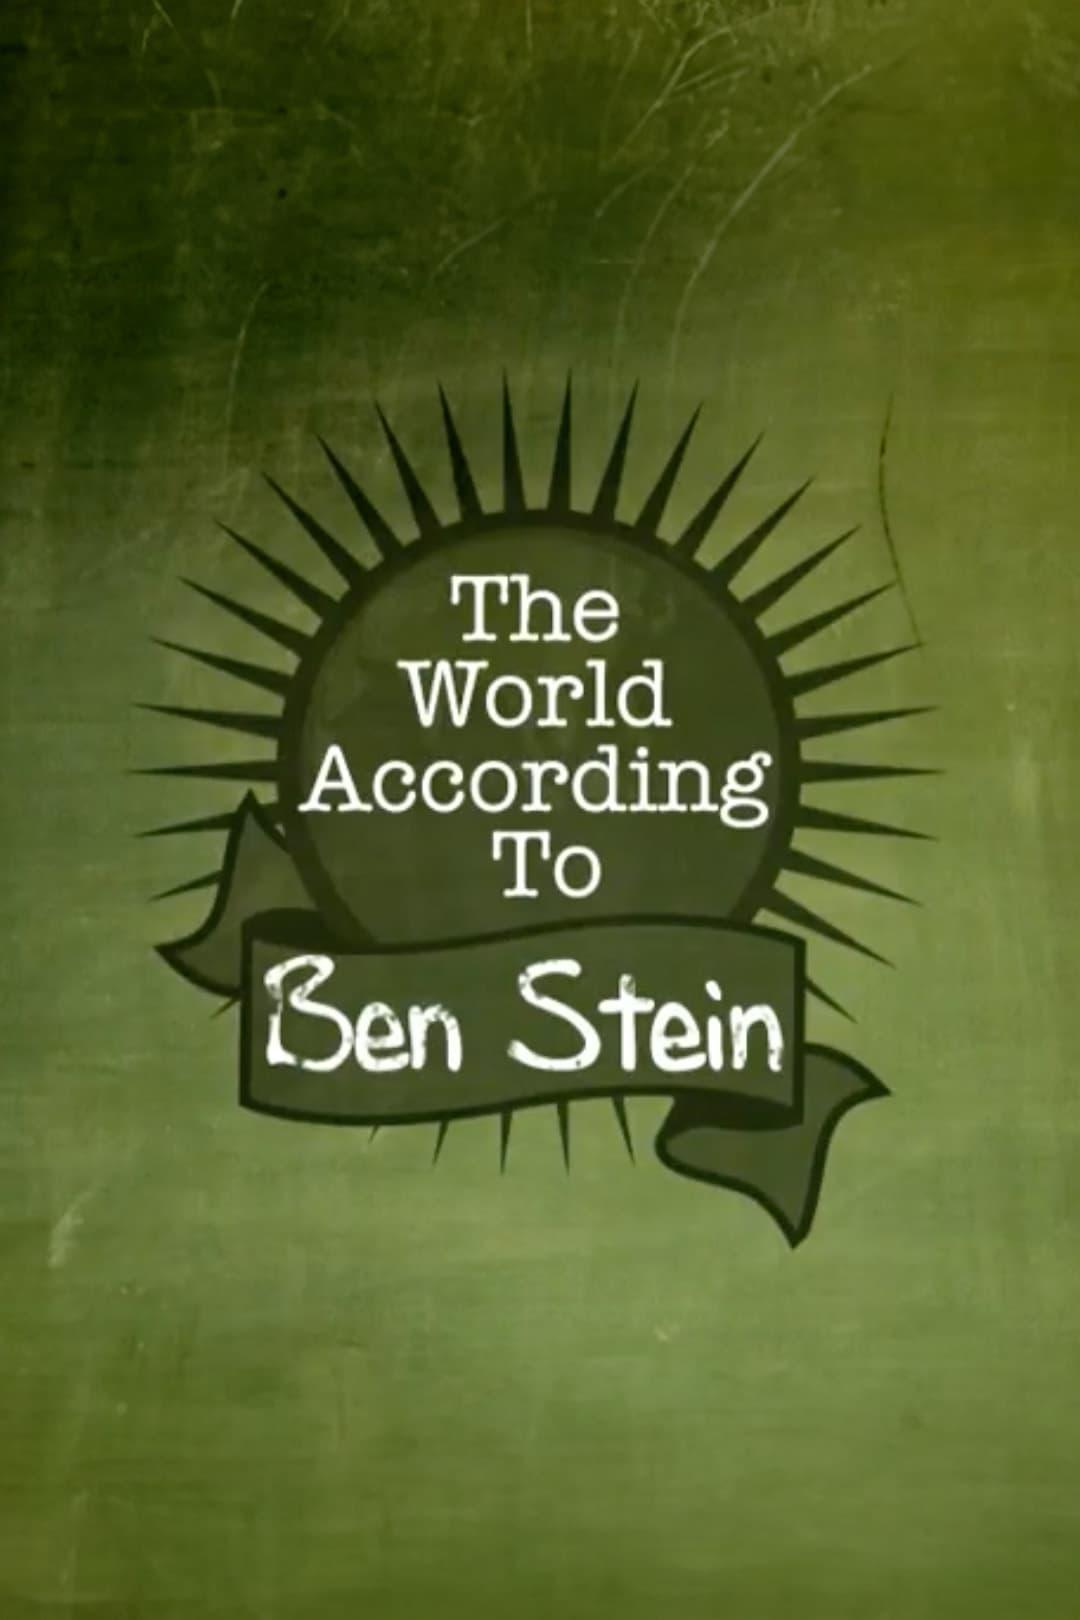 The World According to Ben Stein poster